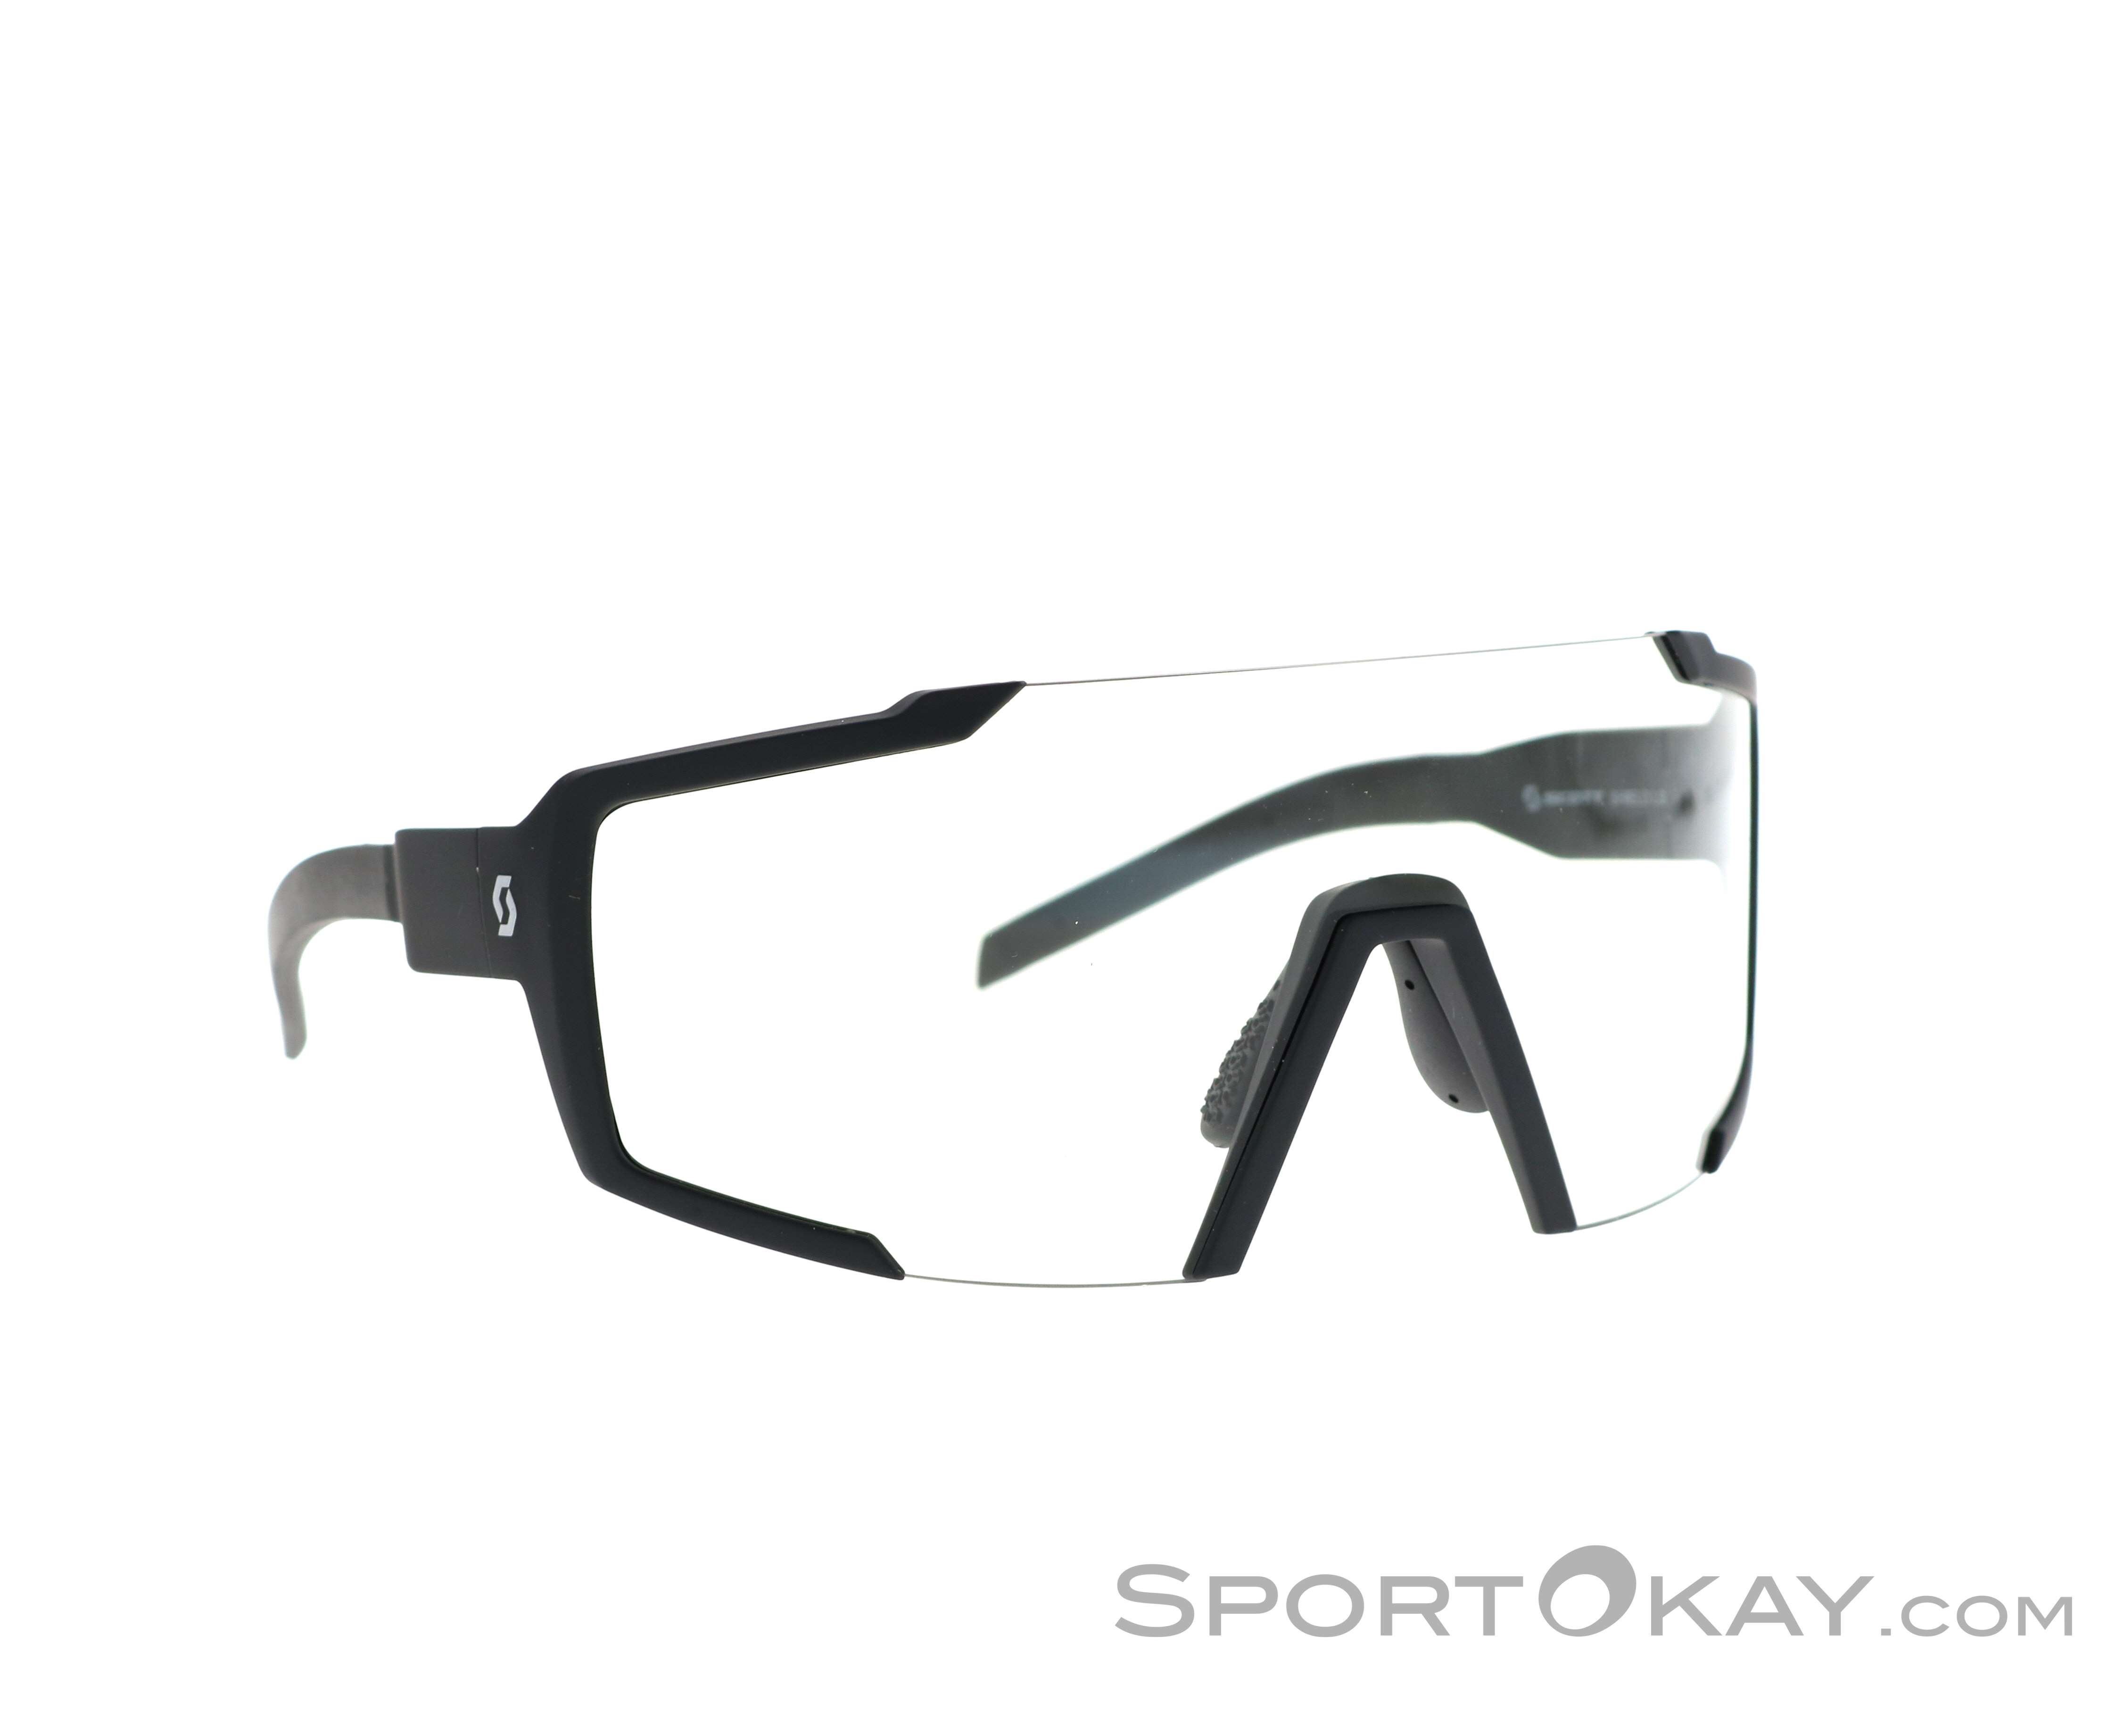 Scott Shield LS Fahrrad Sonnenbrille schwarz/grau light sensitive photochrom 